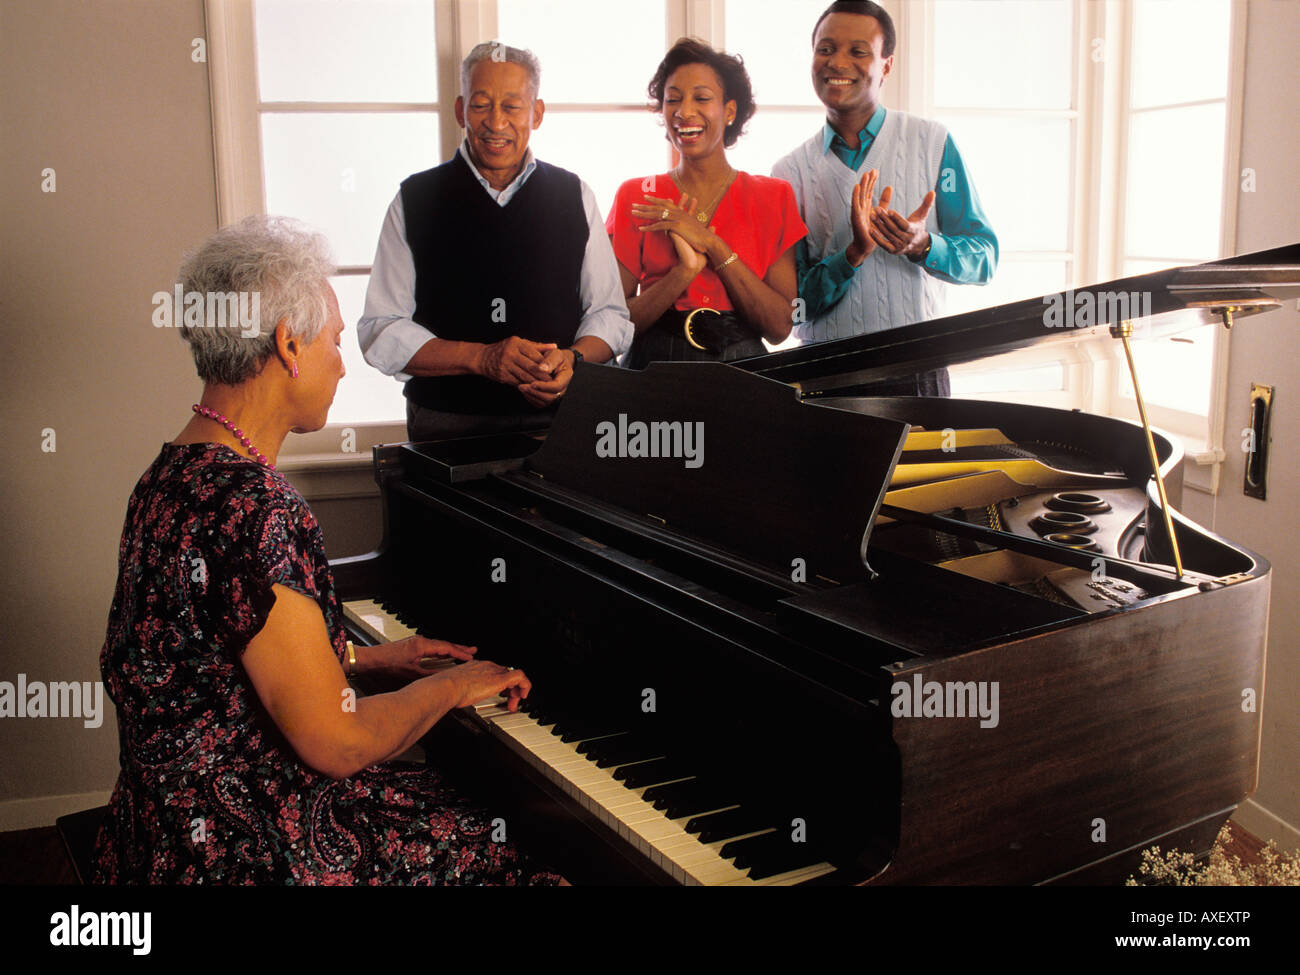 FAMILLE AU PIANO Photo Stock - Alamy